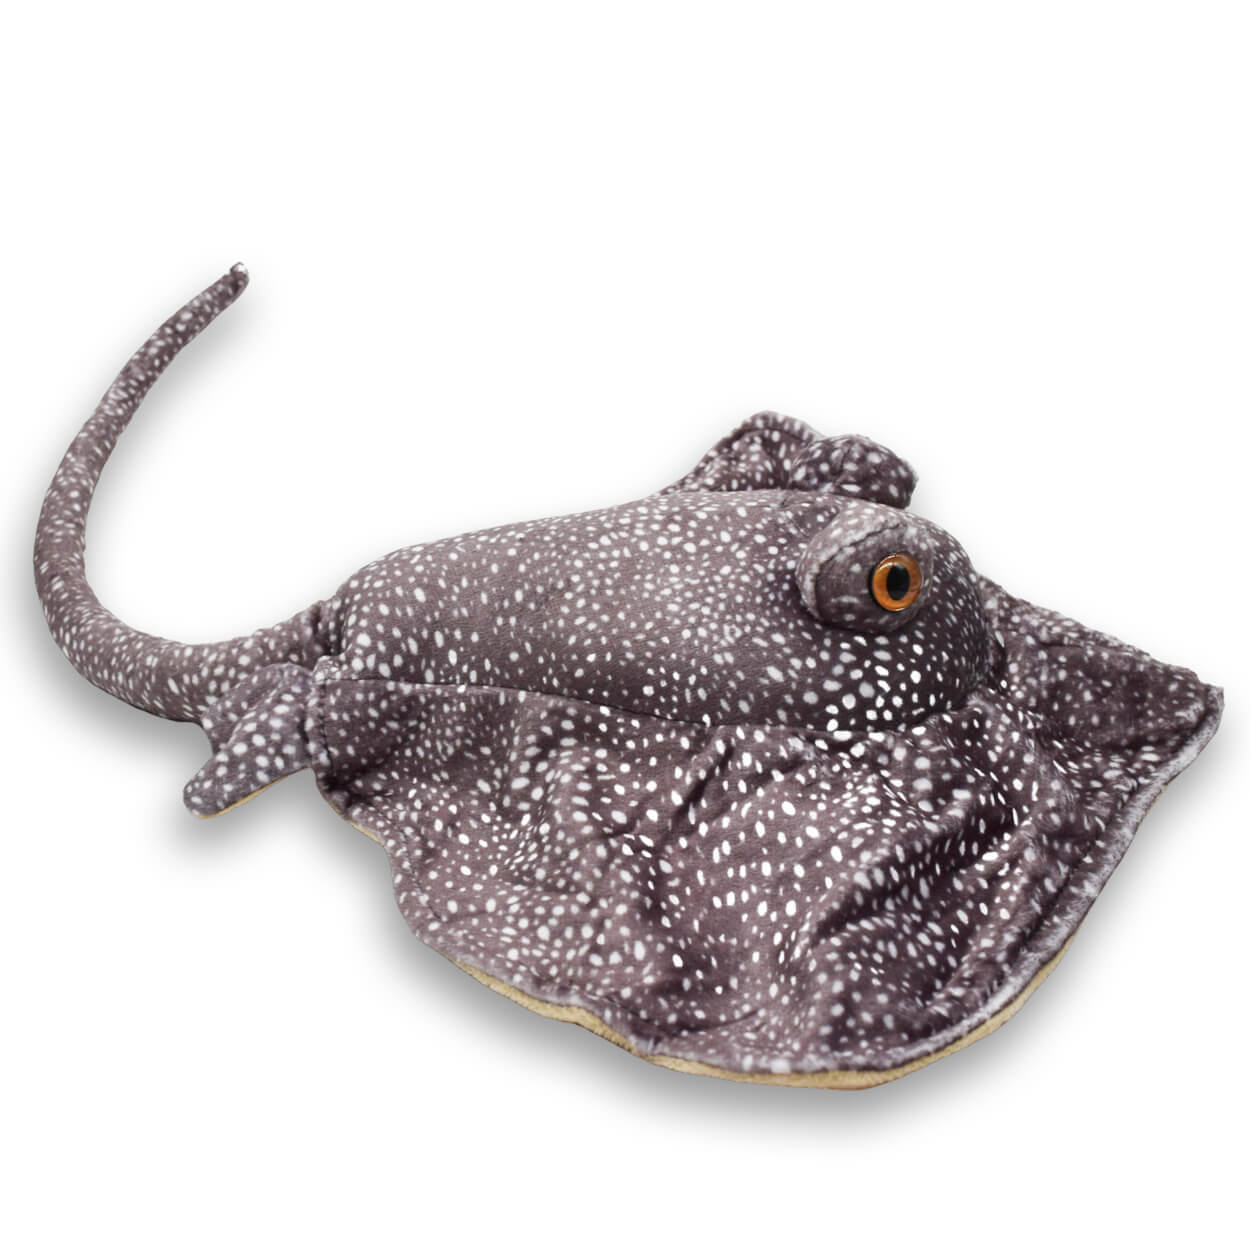 Realistic Skate Fish Stuffed Animal Plush Toy